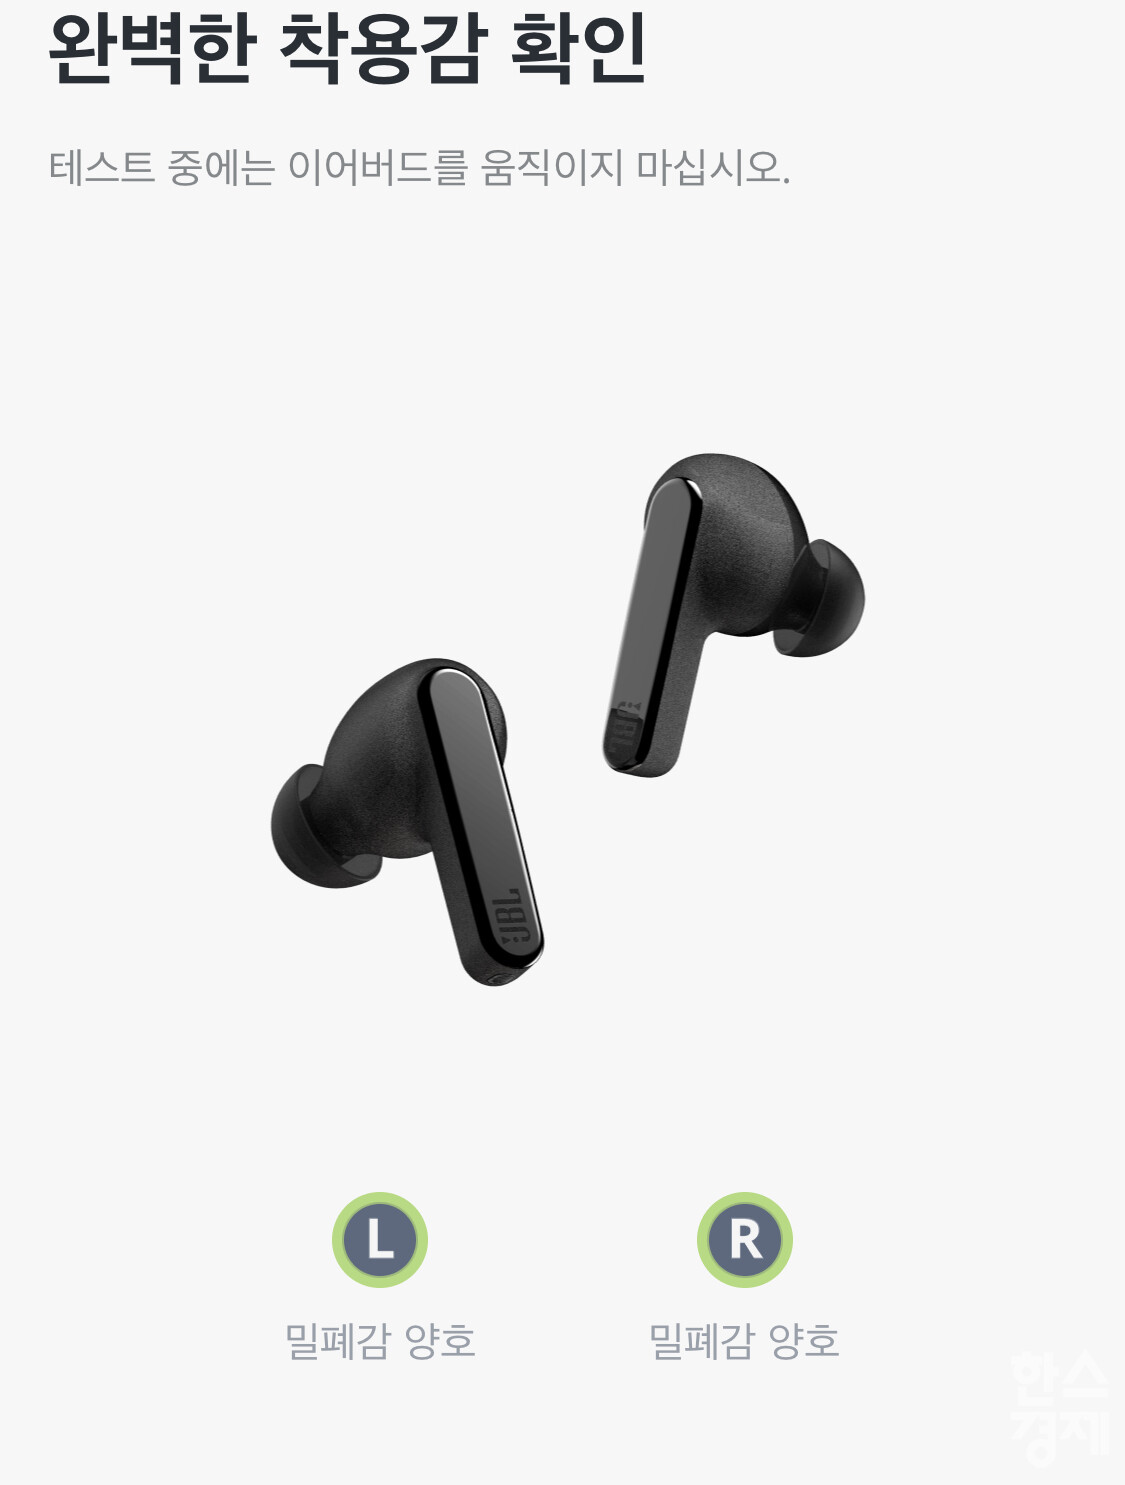 JBL Headphones 앱 내 '완벽한 착용감 확인' 기능. /사진=최정화 기자